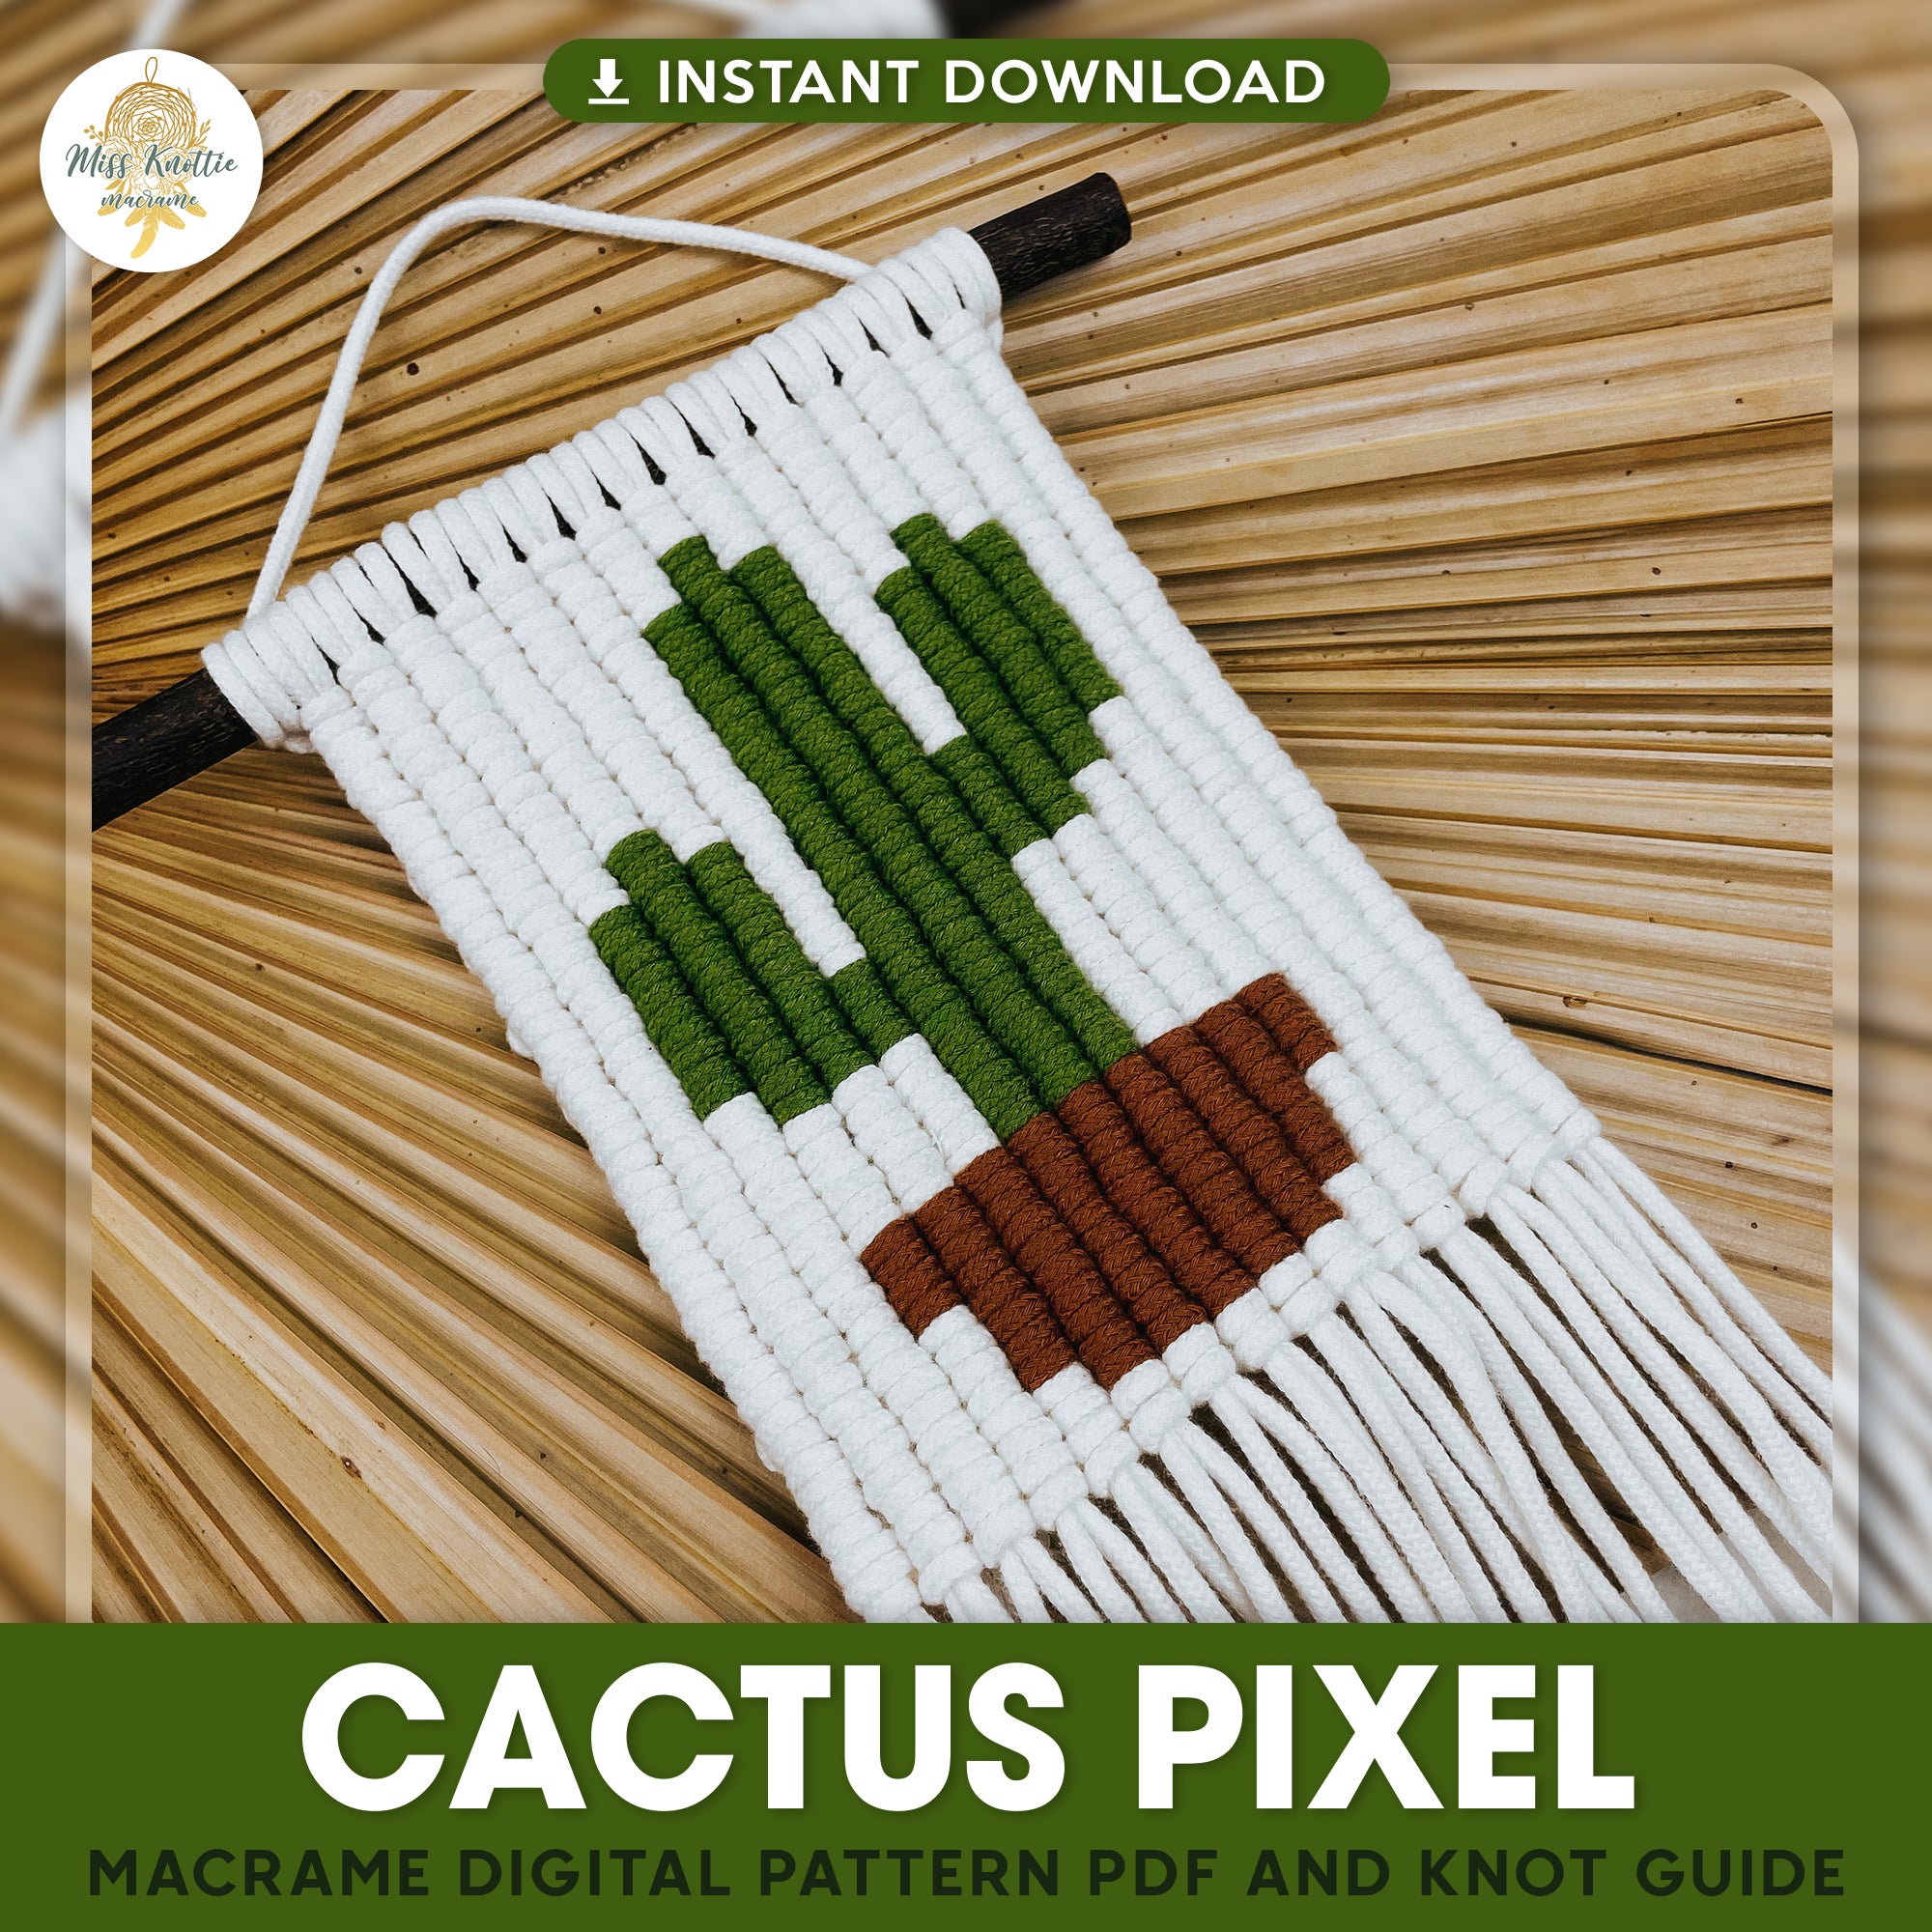 Cactus Pixel Pattern - Guia Digital de PDF e Nós